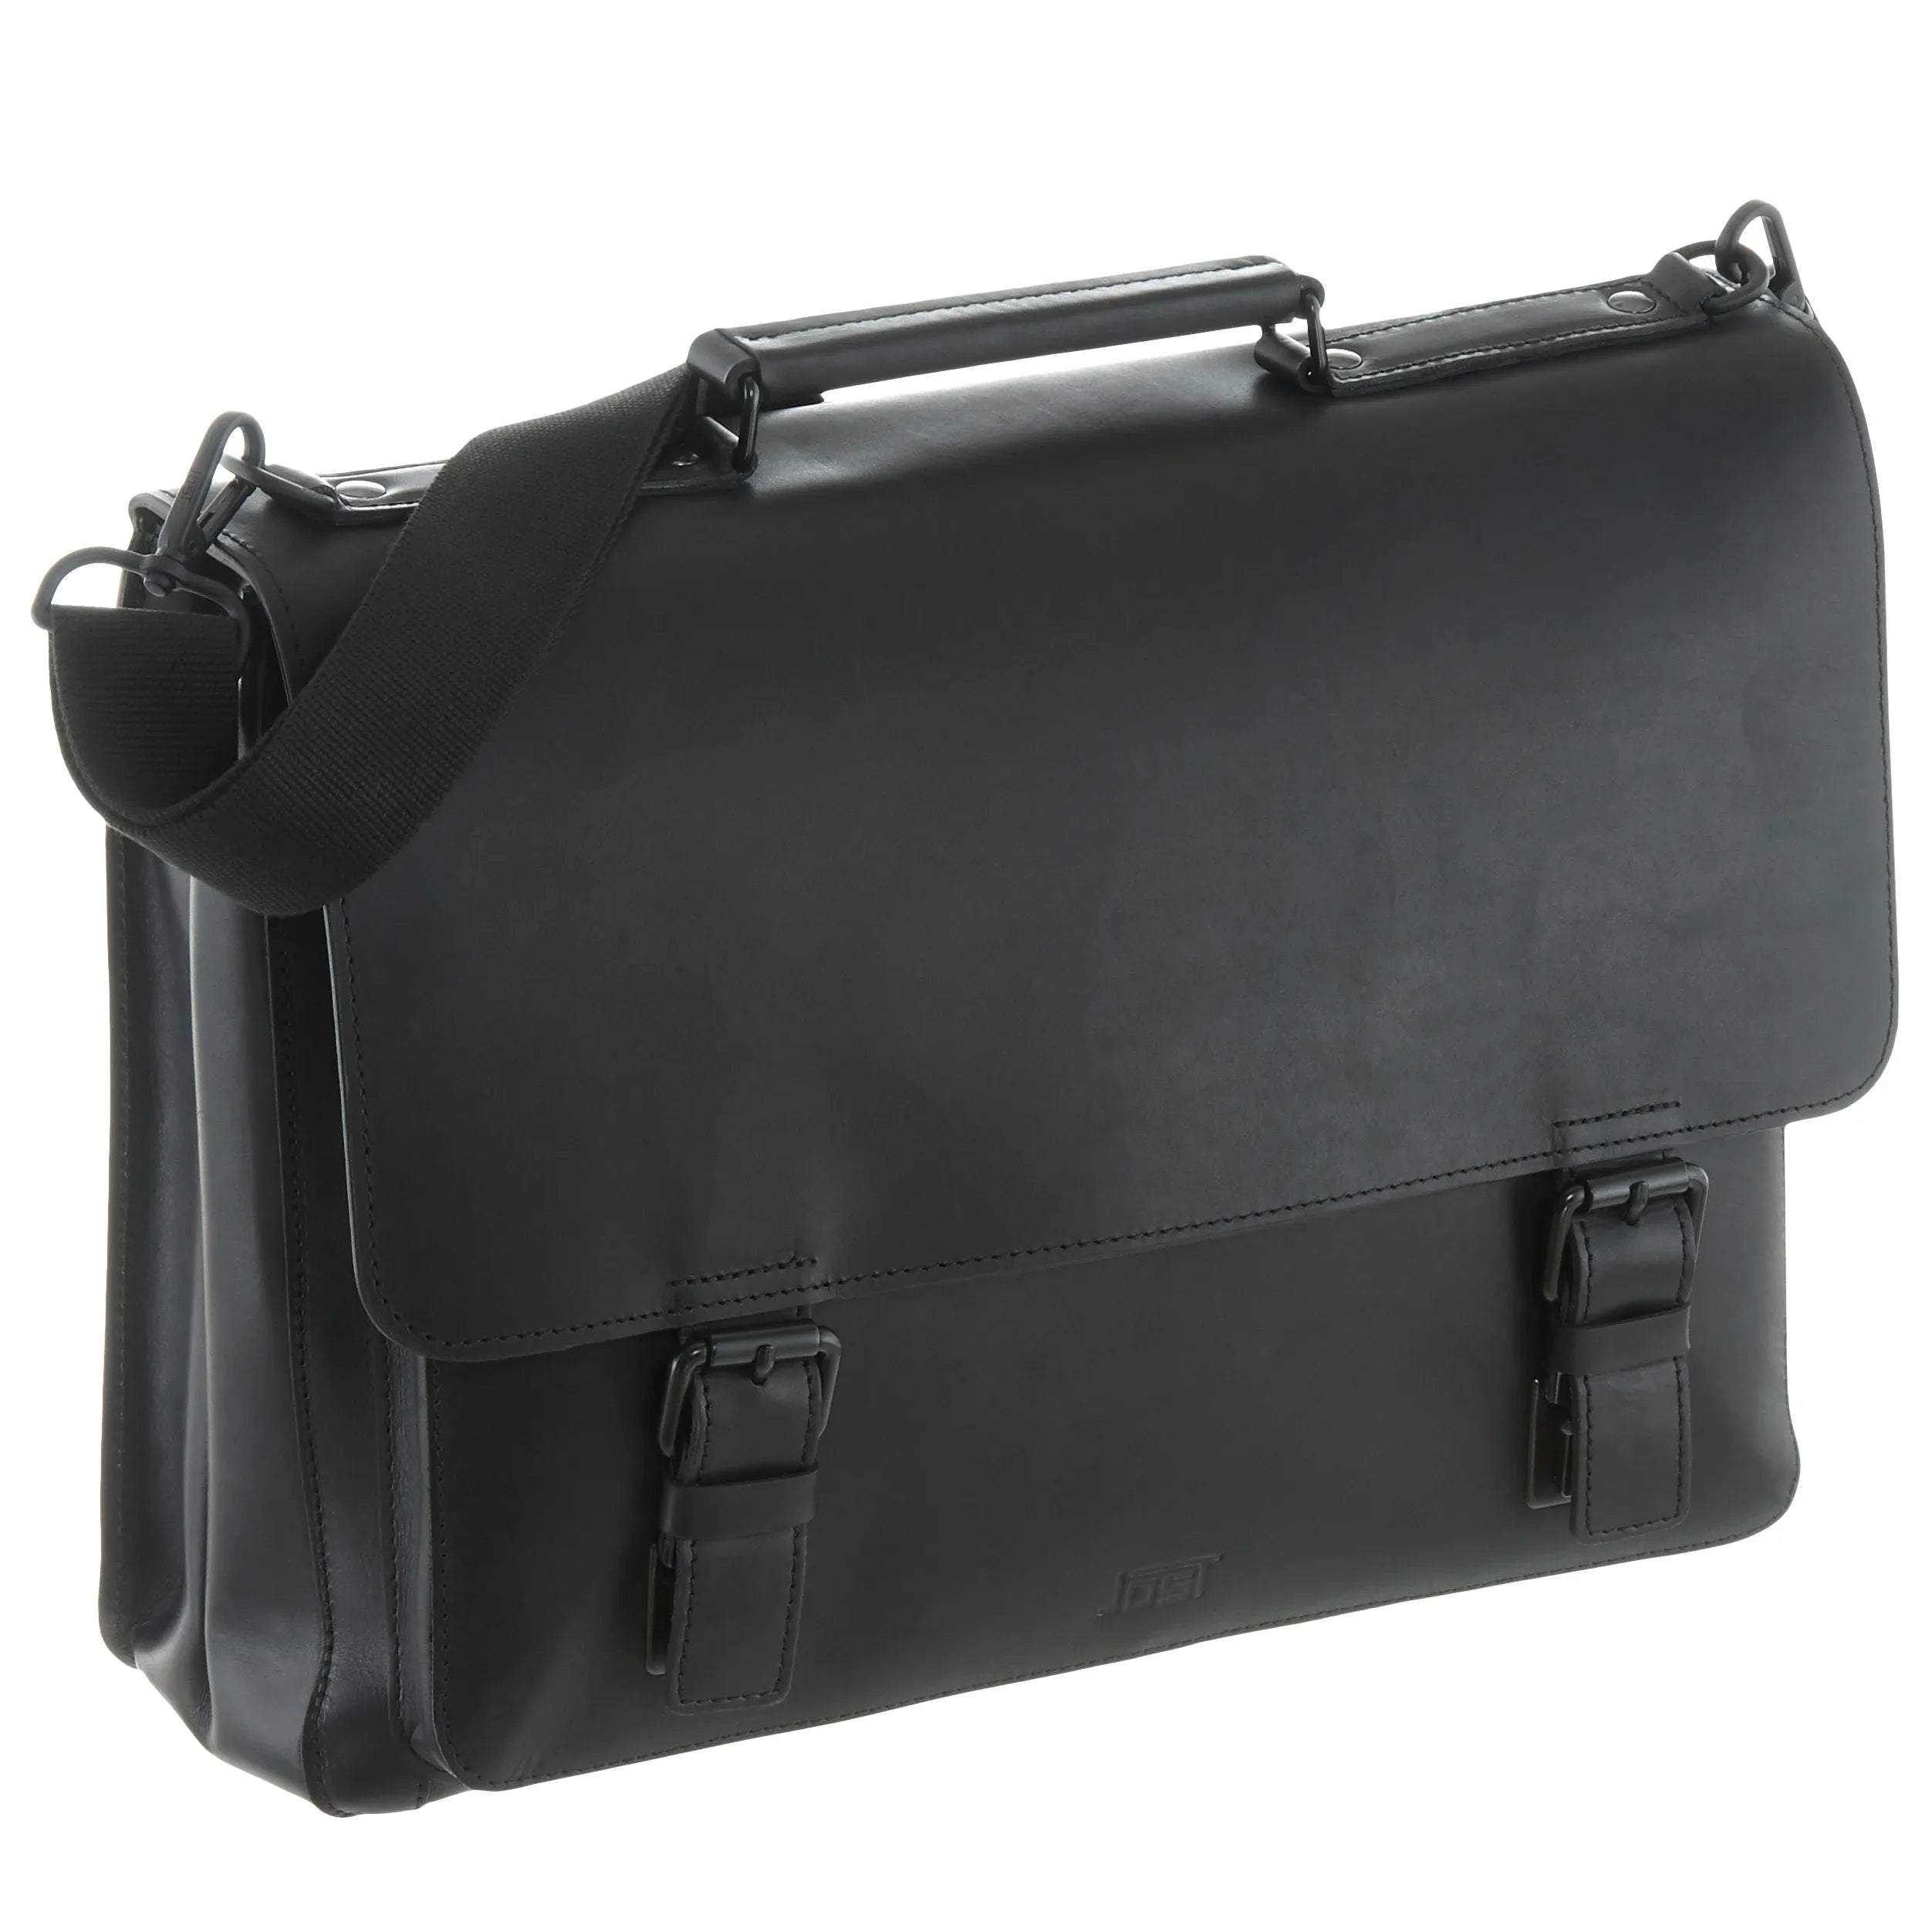 Jost Futura laptop briefcase 40 cm - black